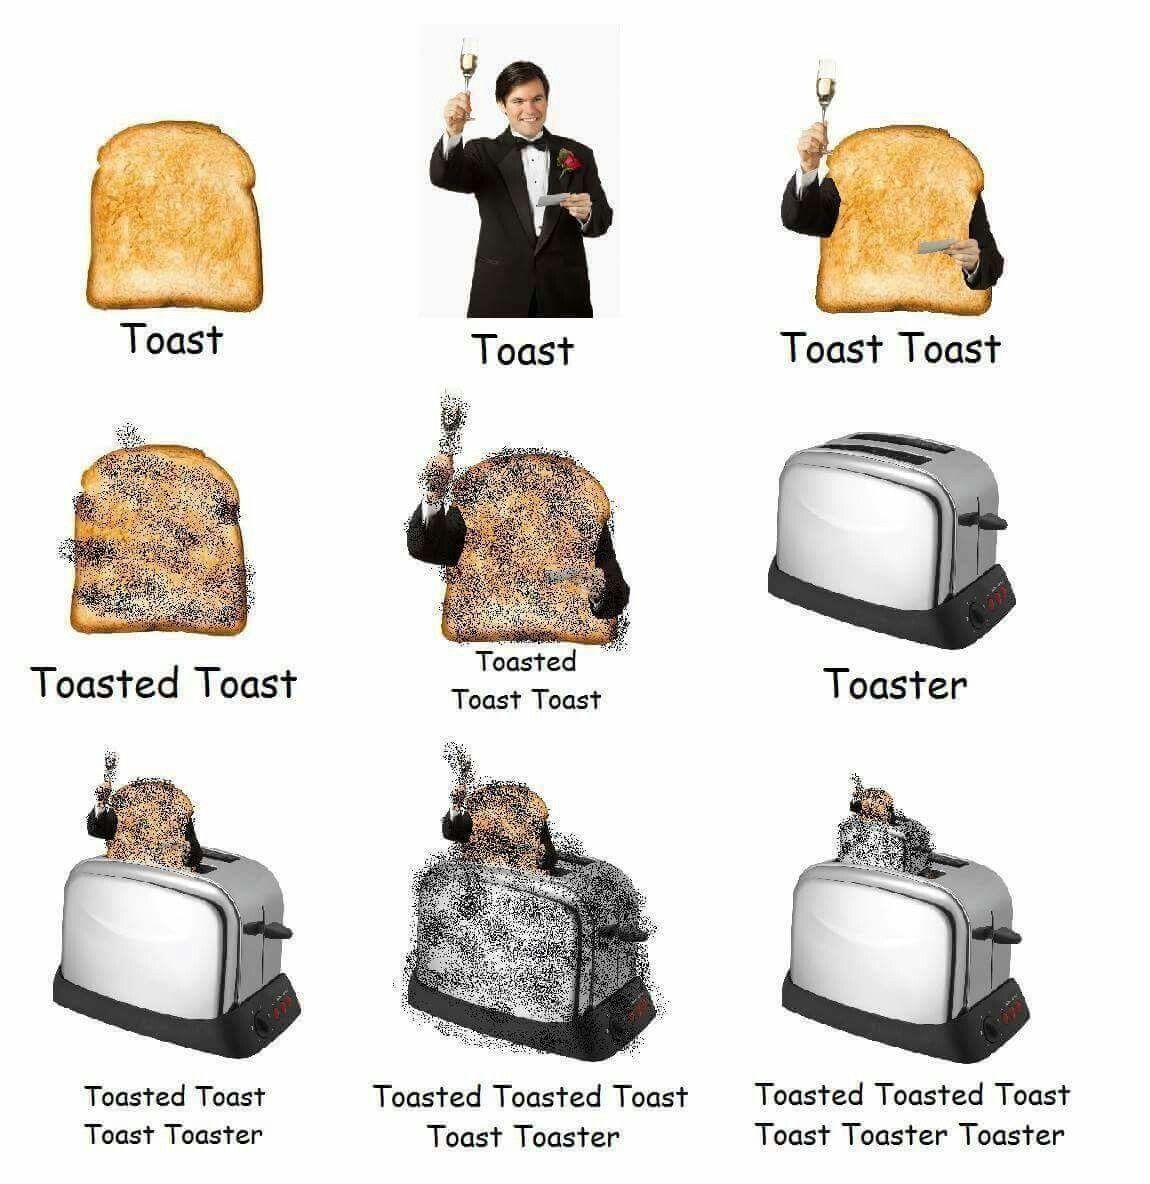 Toasty - meme